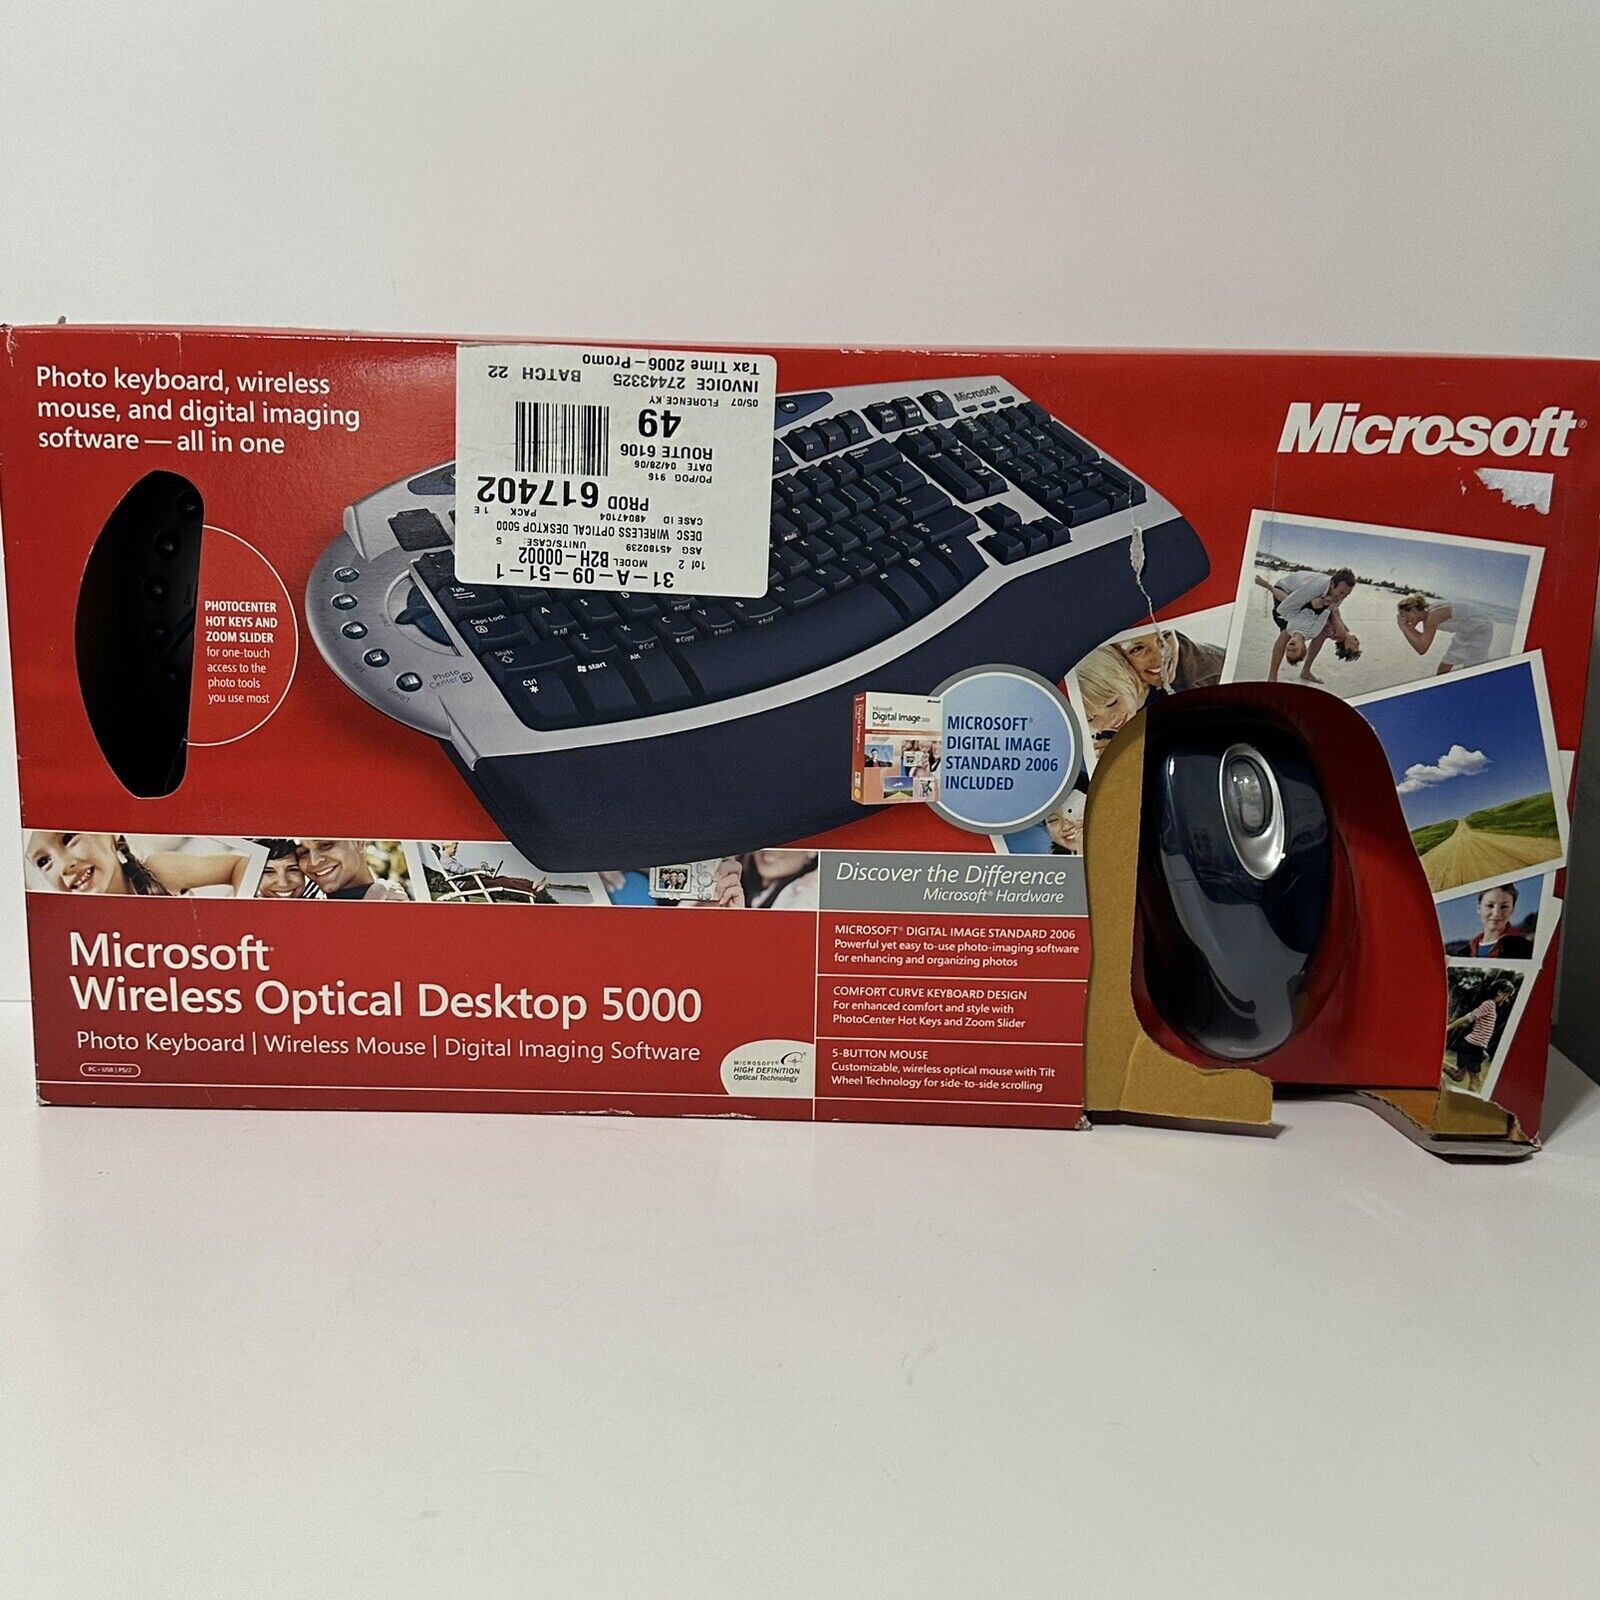 NEW NOS Microsoft 5000 Wireless Optical Desktop wireless Mouse Photo Keyboard